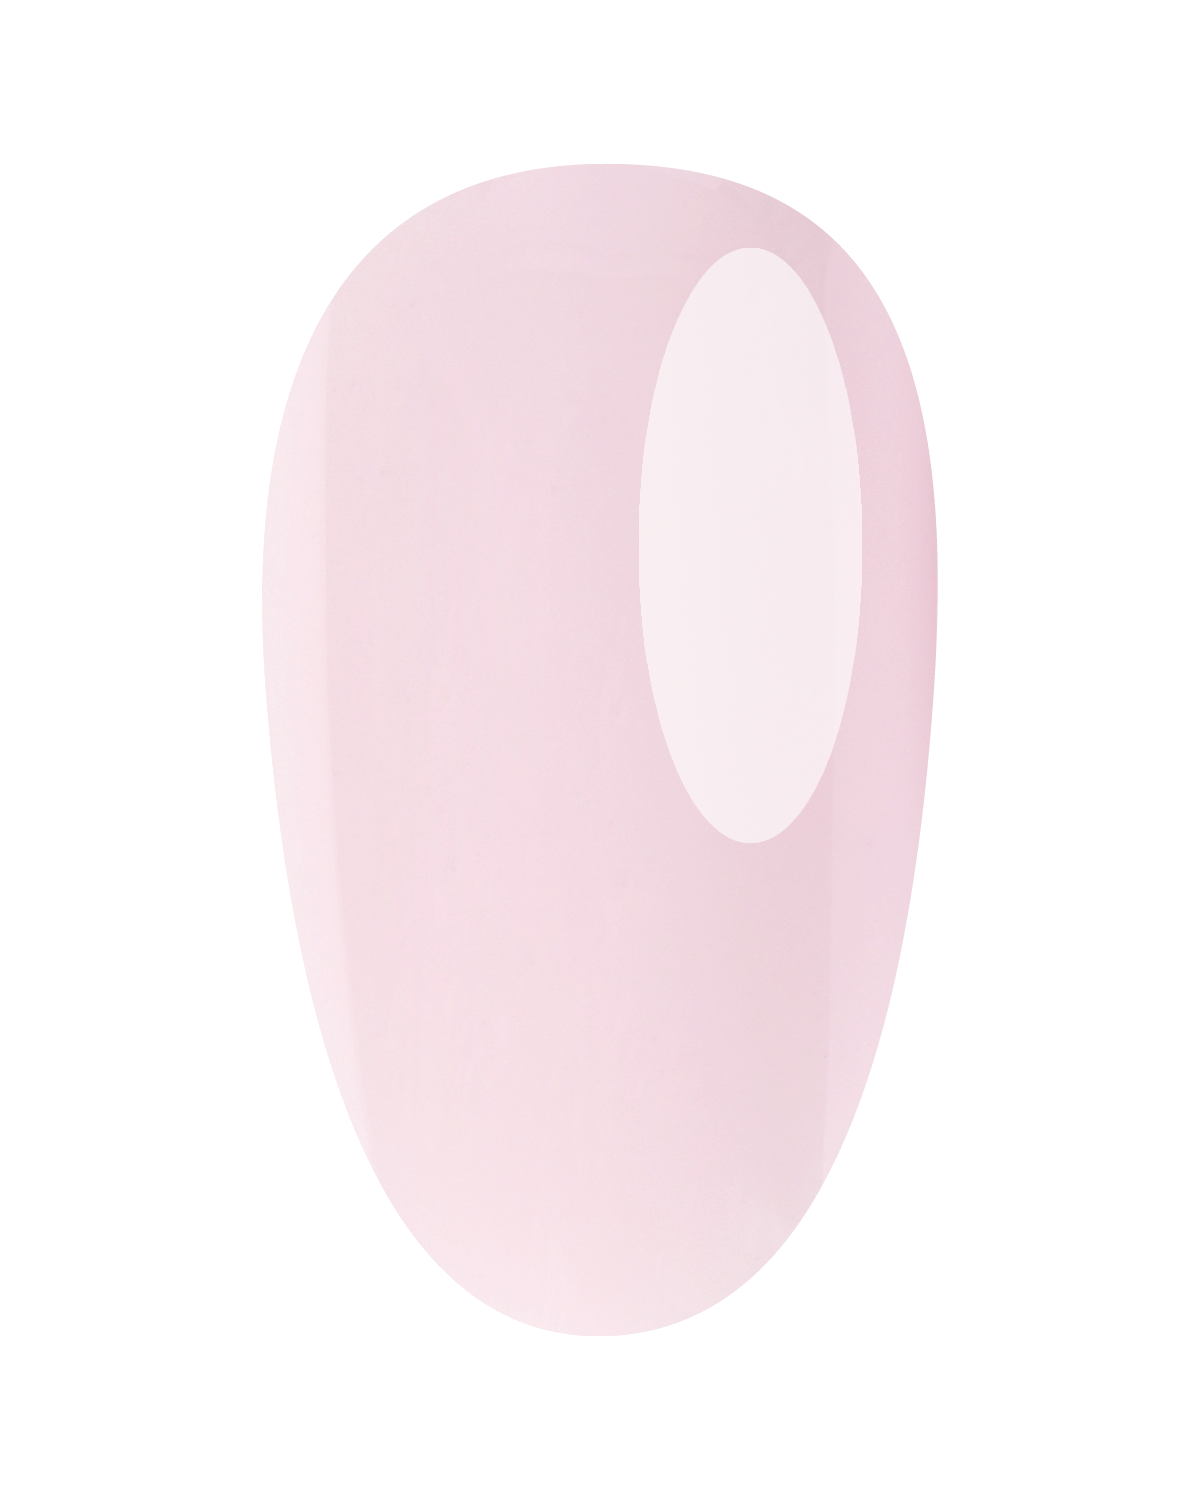 E.MiLac Base Gel French Pink #15, 9 ml